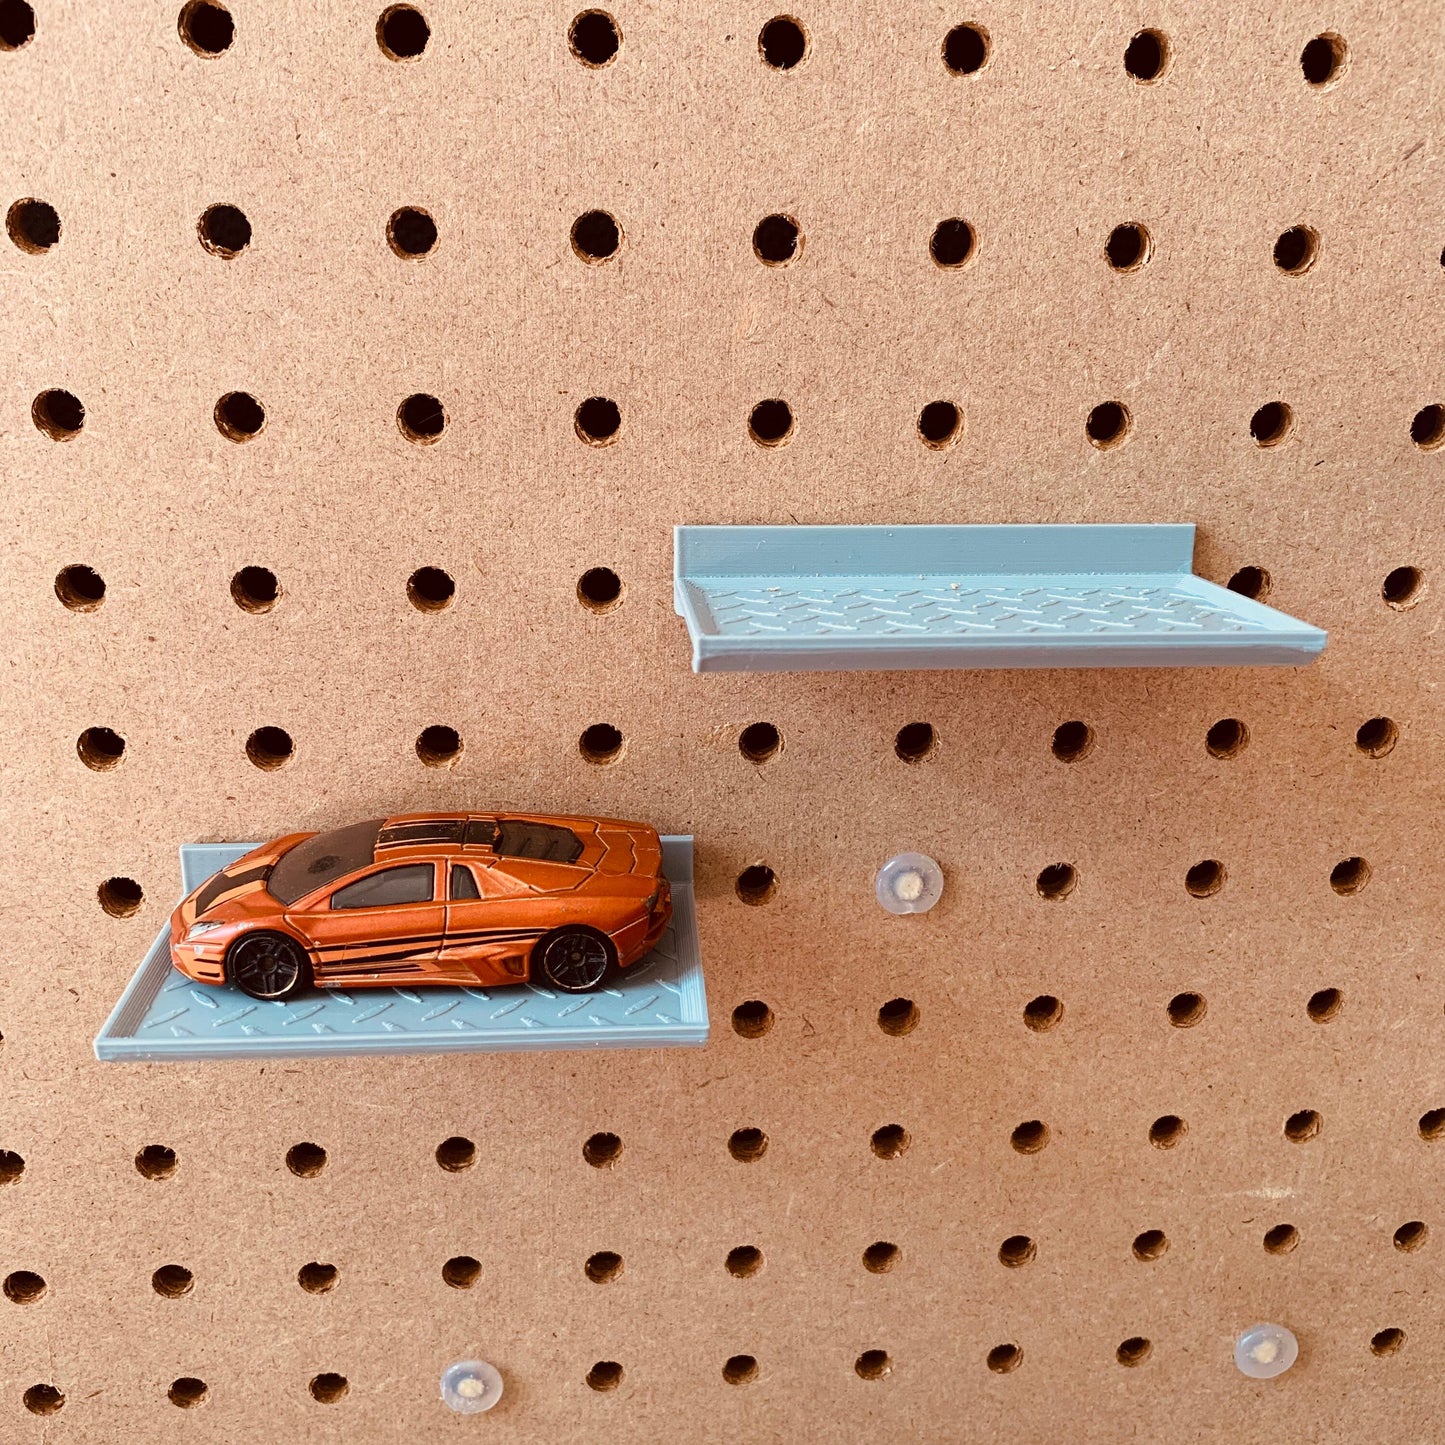 Display Hotwheels Matchbox Model Car on PegBoard